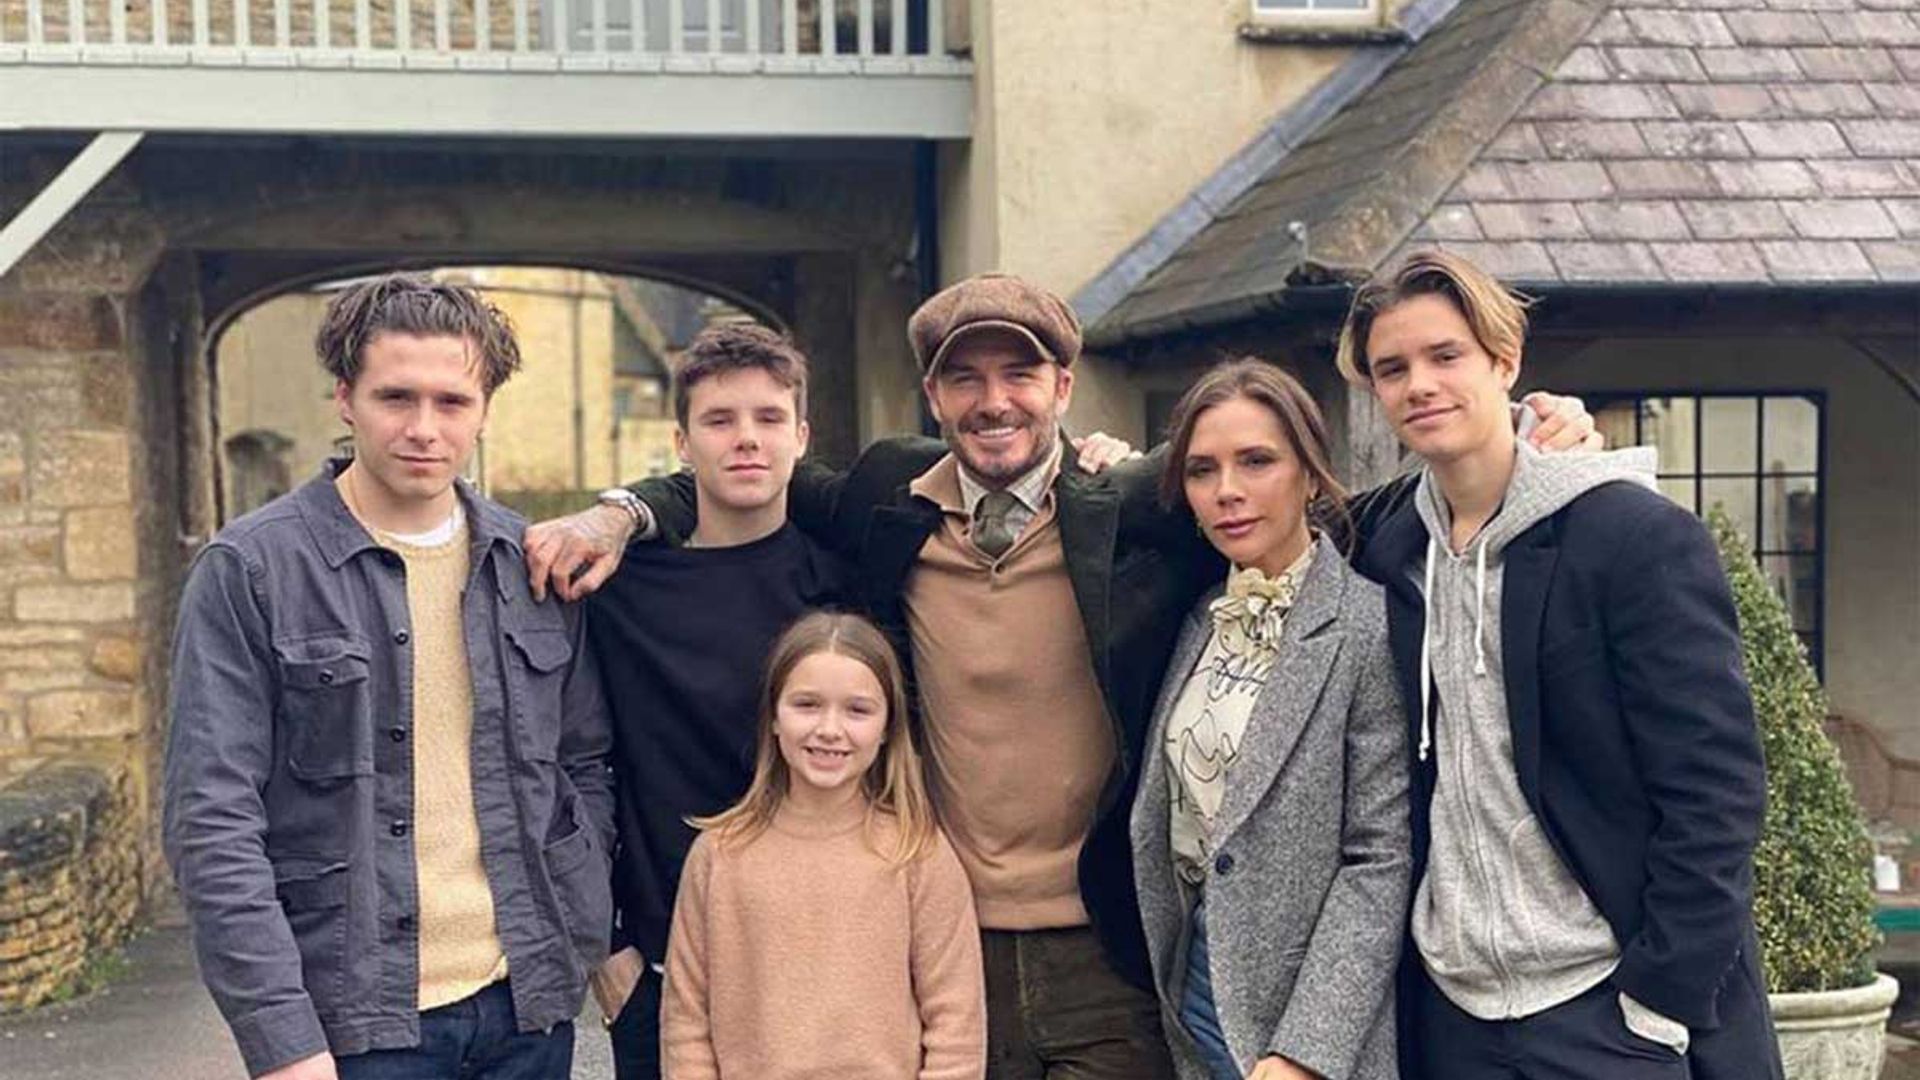 Victoria Beckham reunites with four children for Christmas family photo